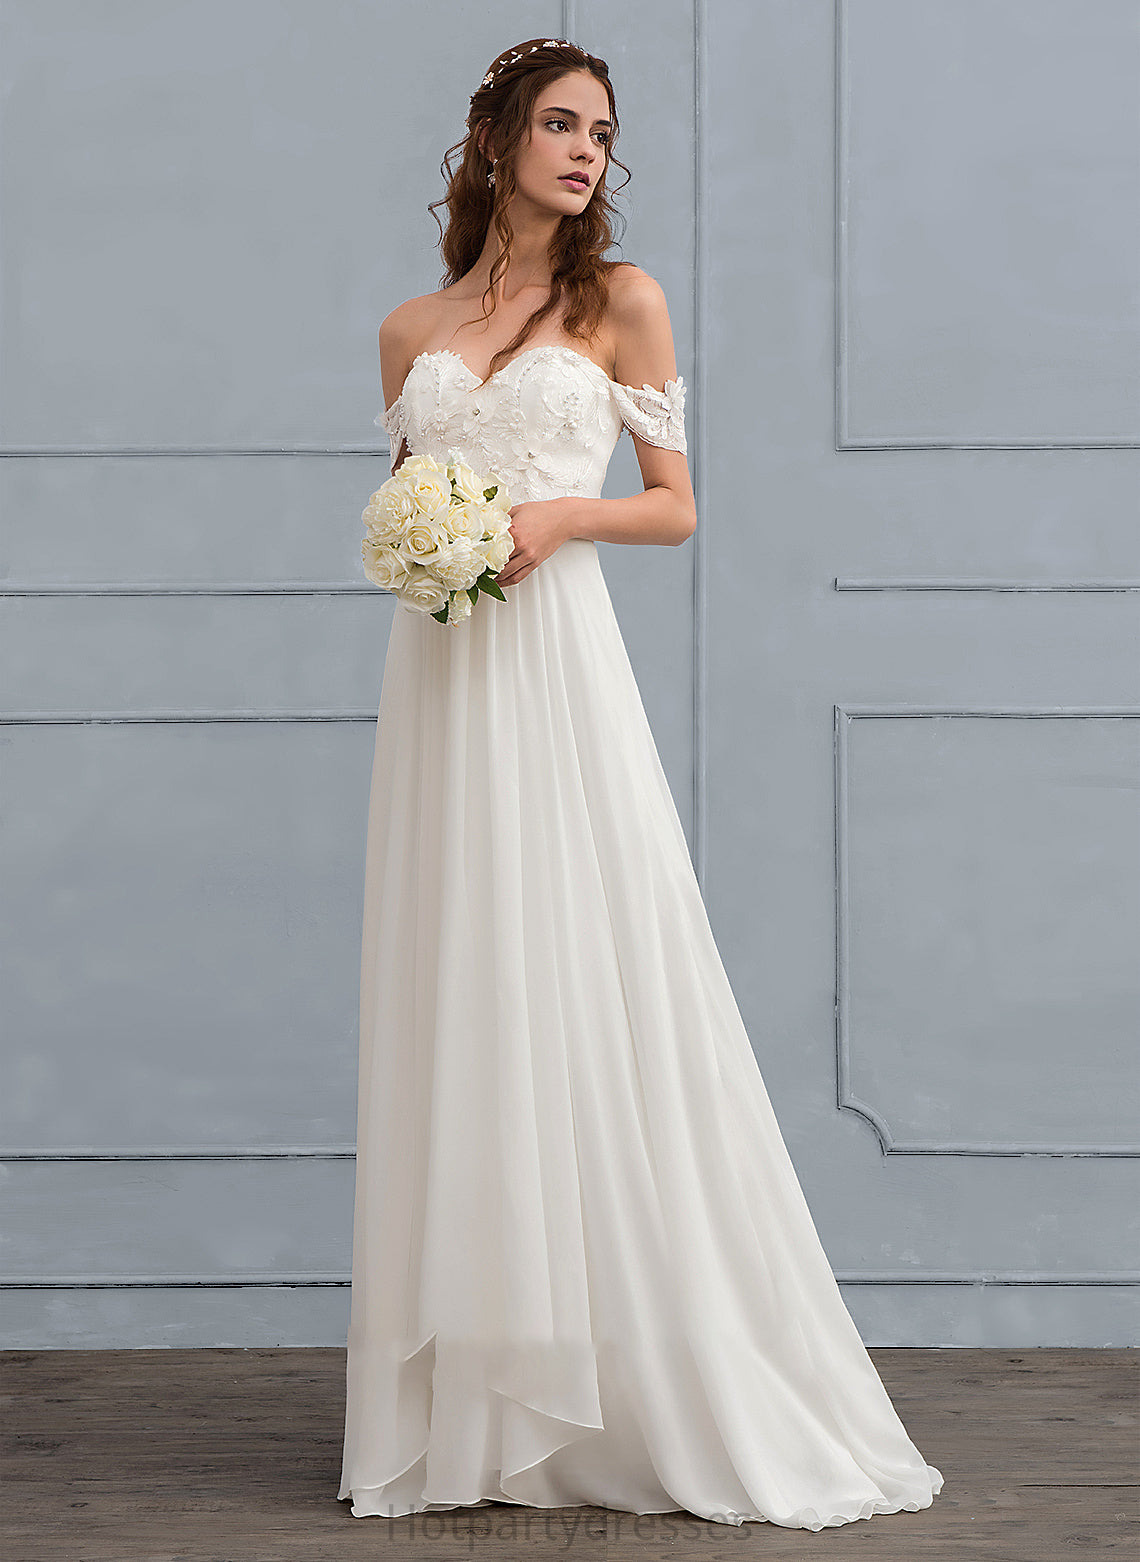 Dress Lace With Caitlin A-Line Sweep Flower(s) Wedding Dresses Train Beading Wedding Chiffon